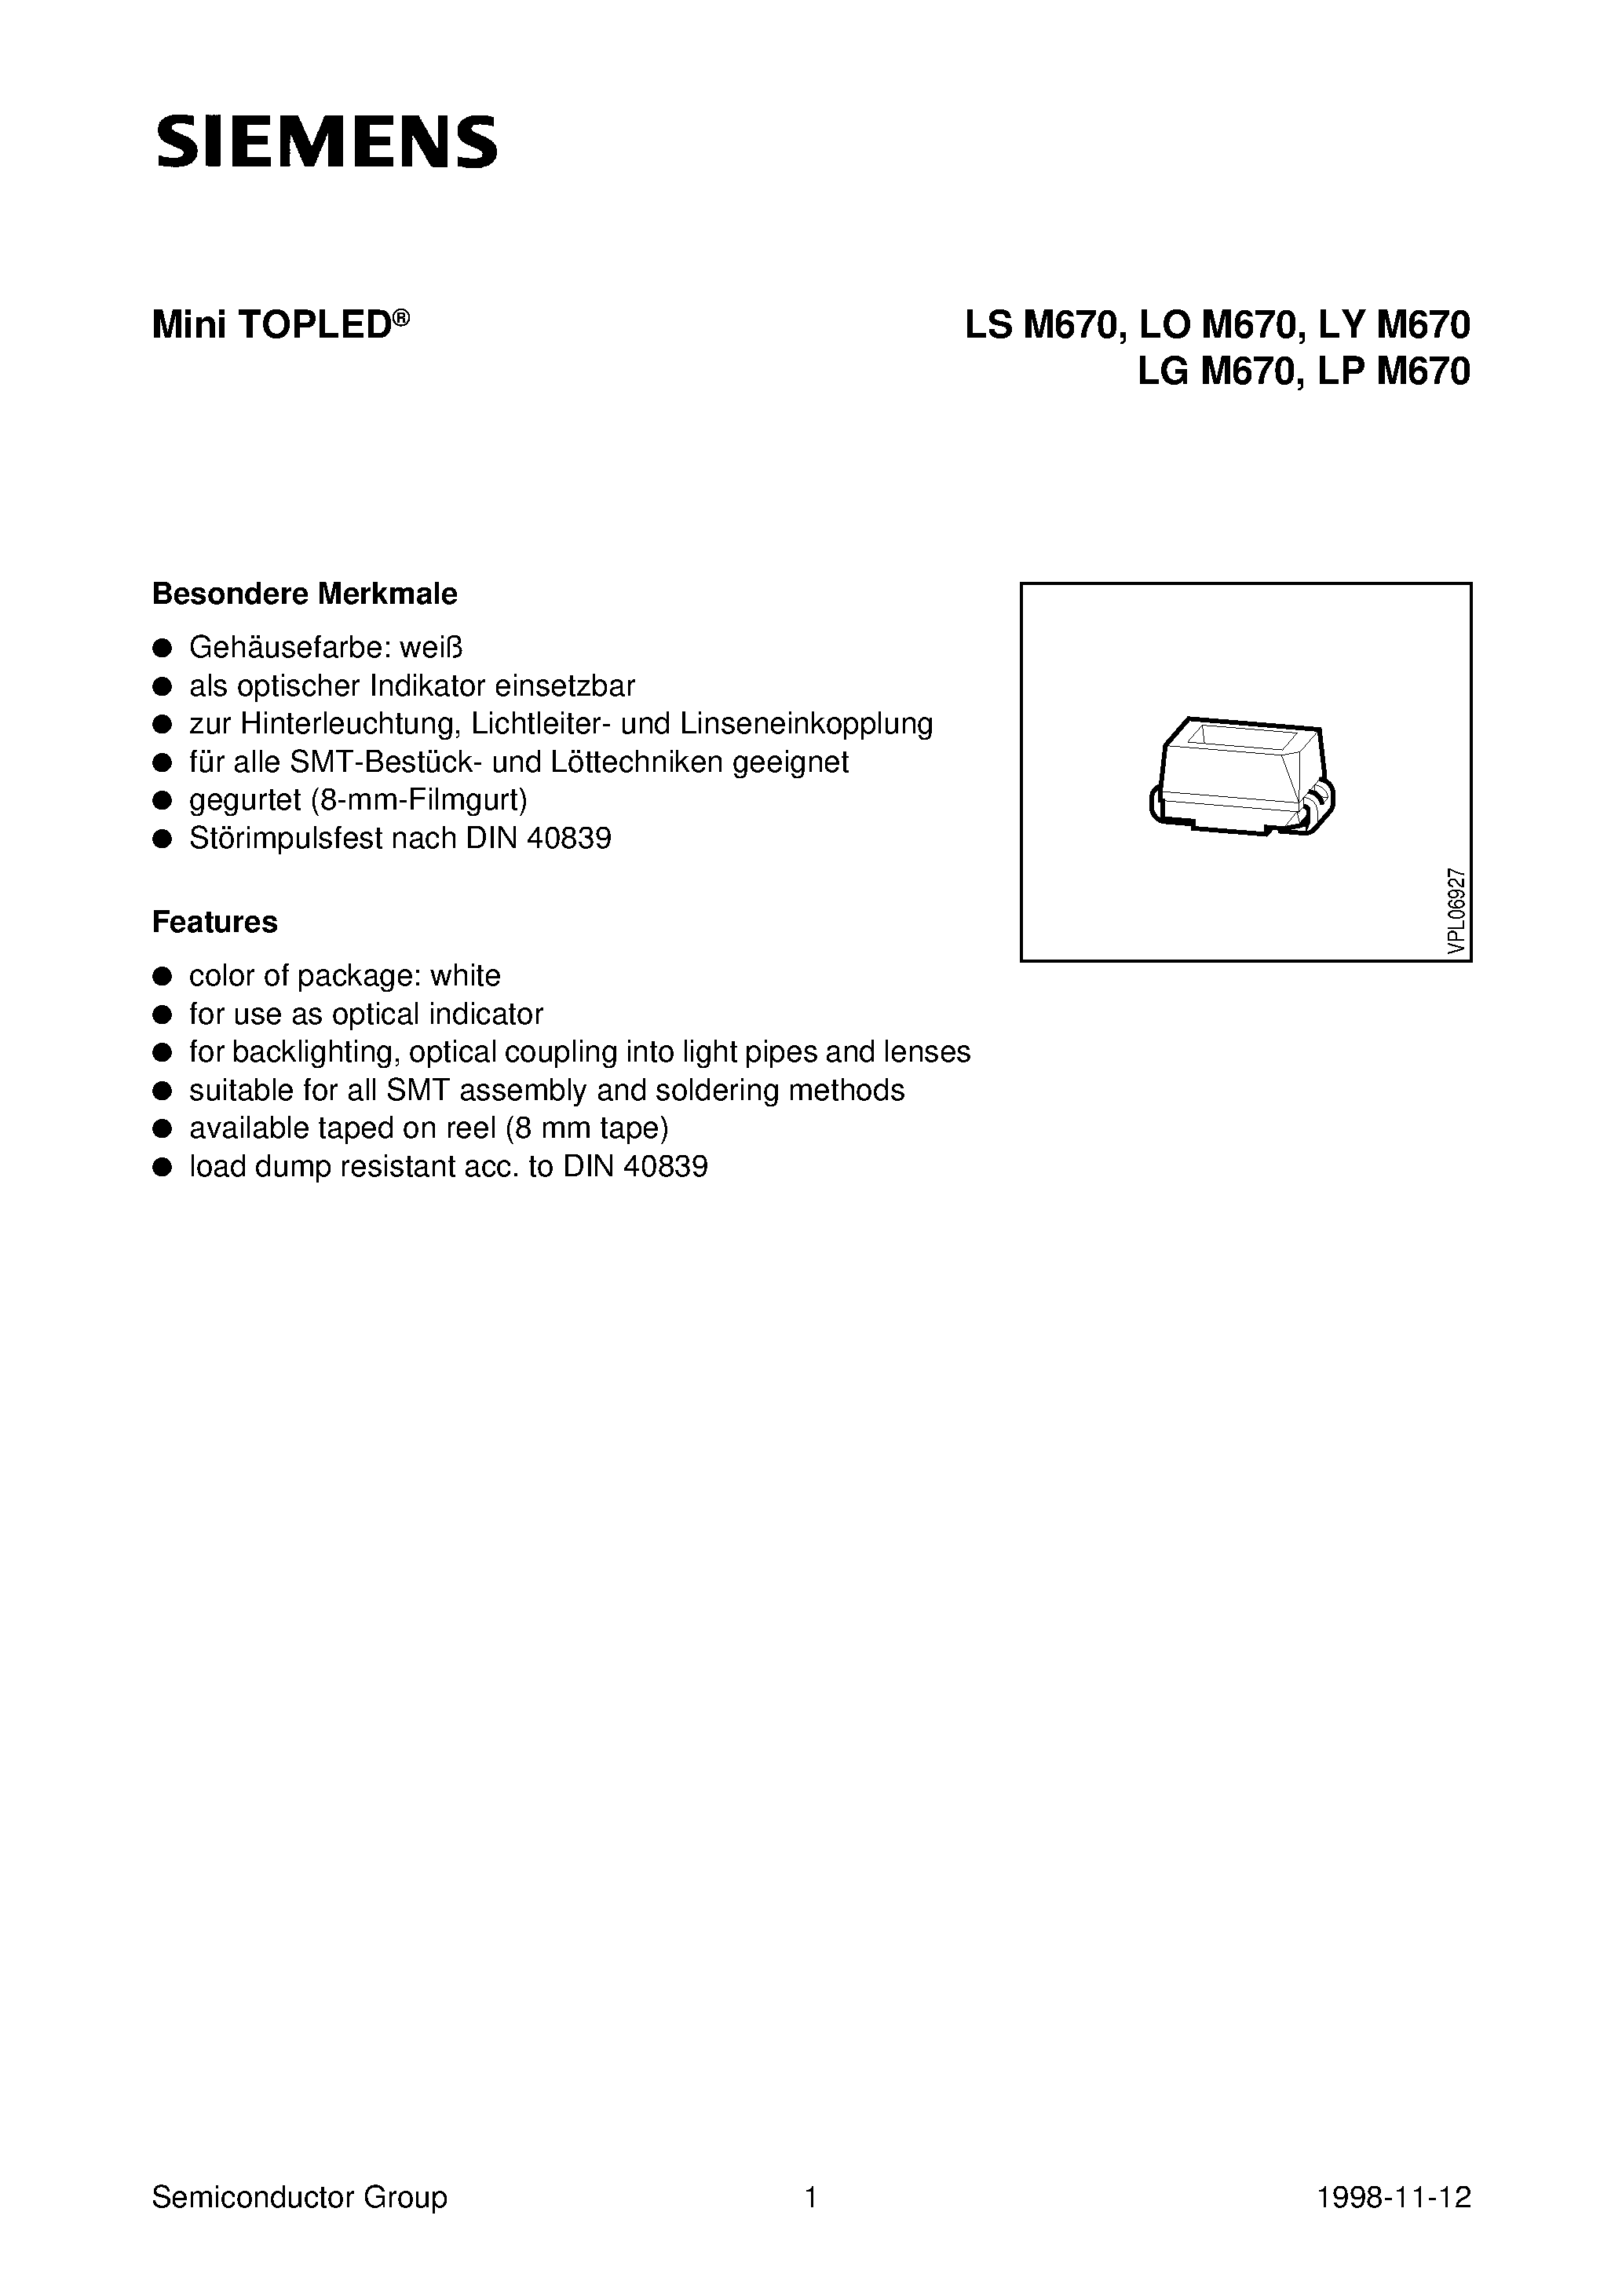 Datasheet LYM670-K - Mini TOPLED page 1